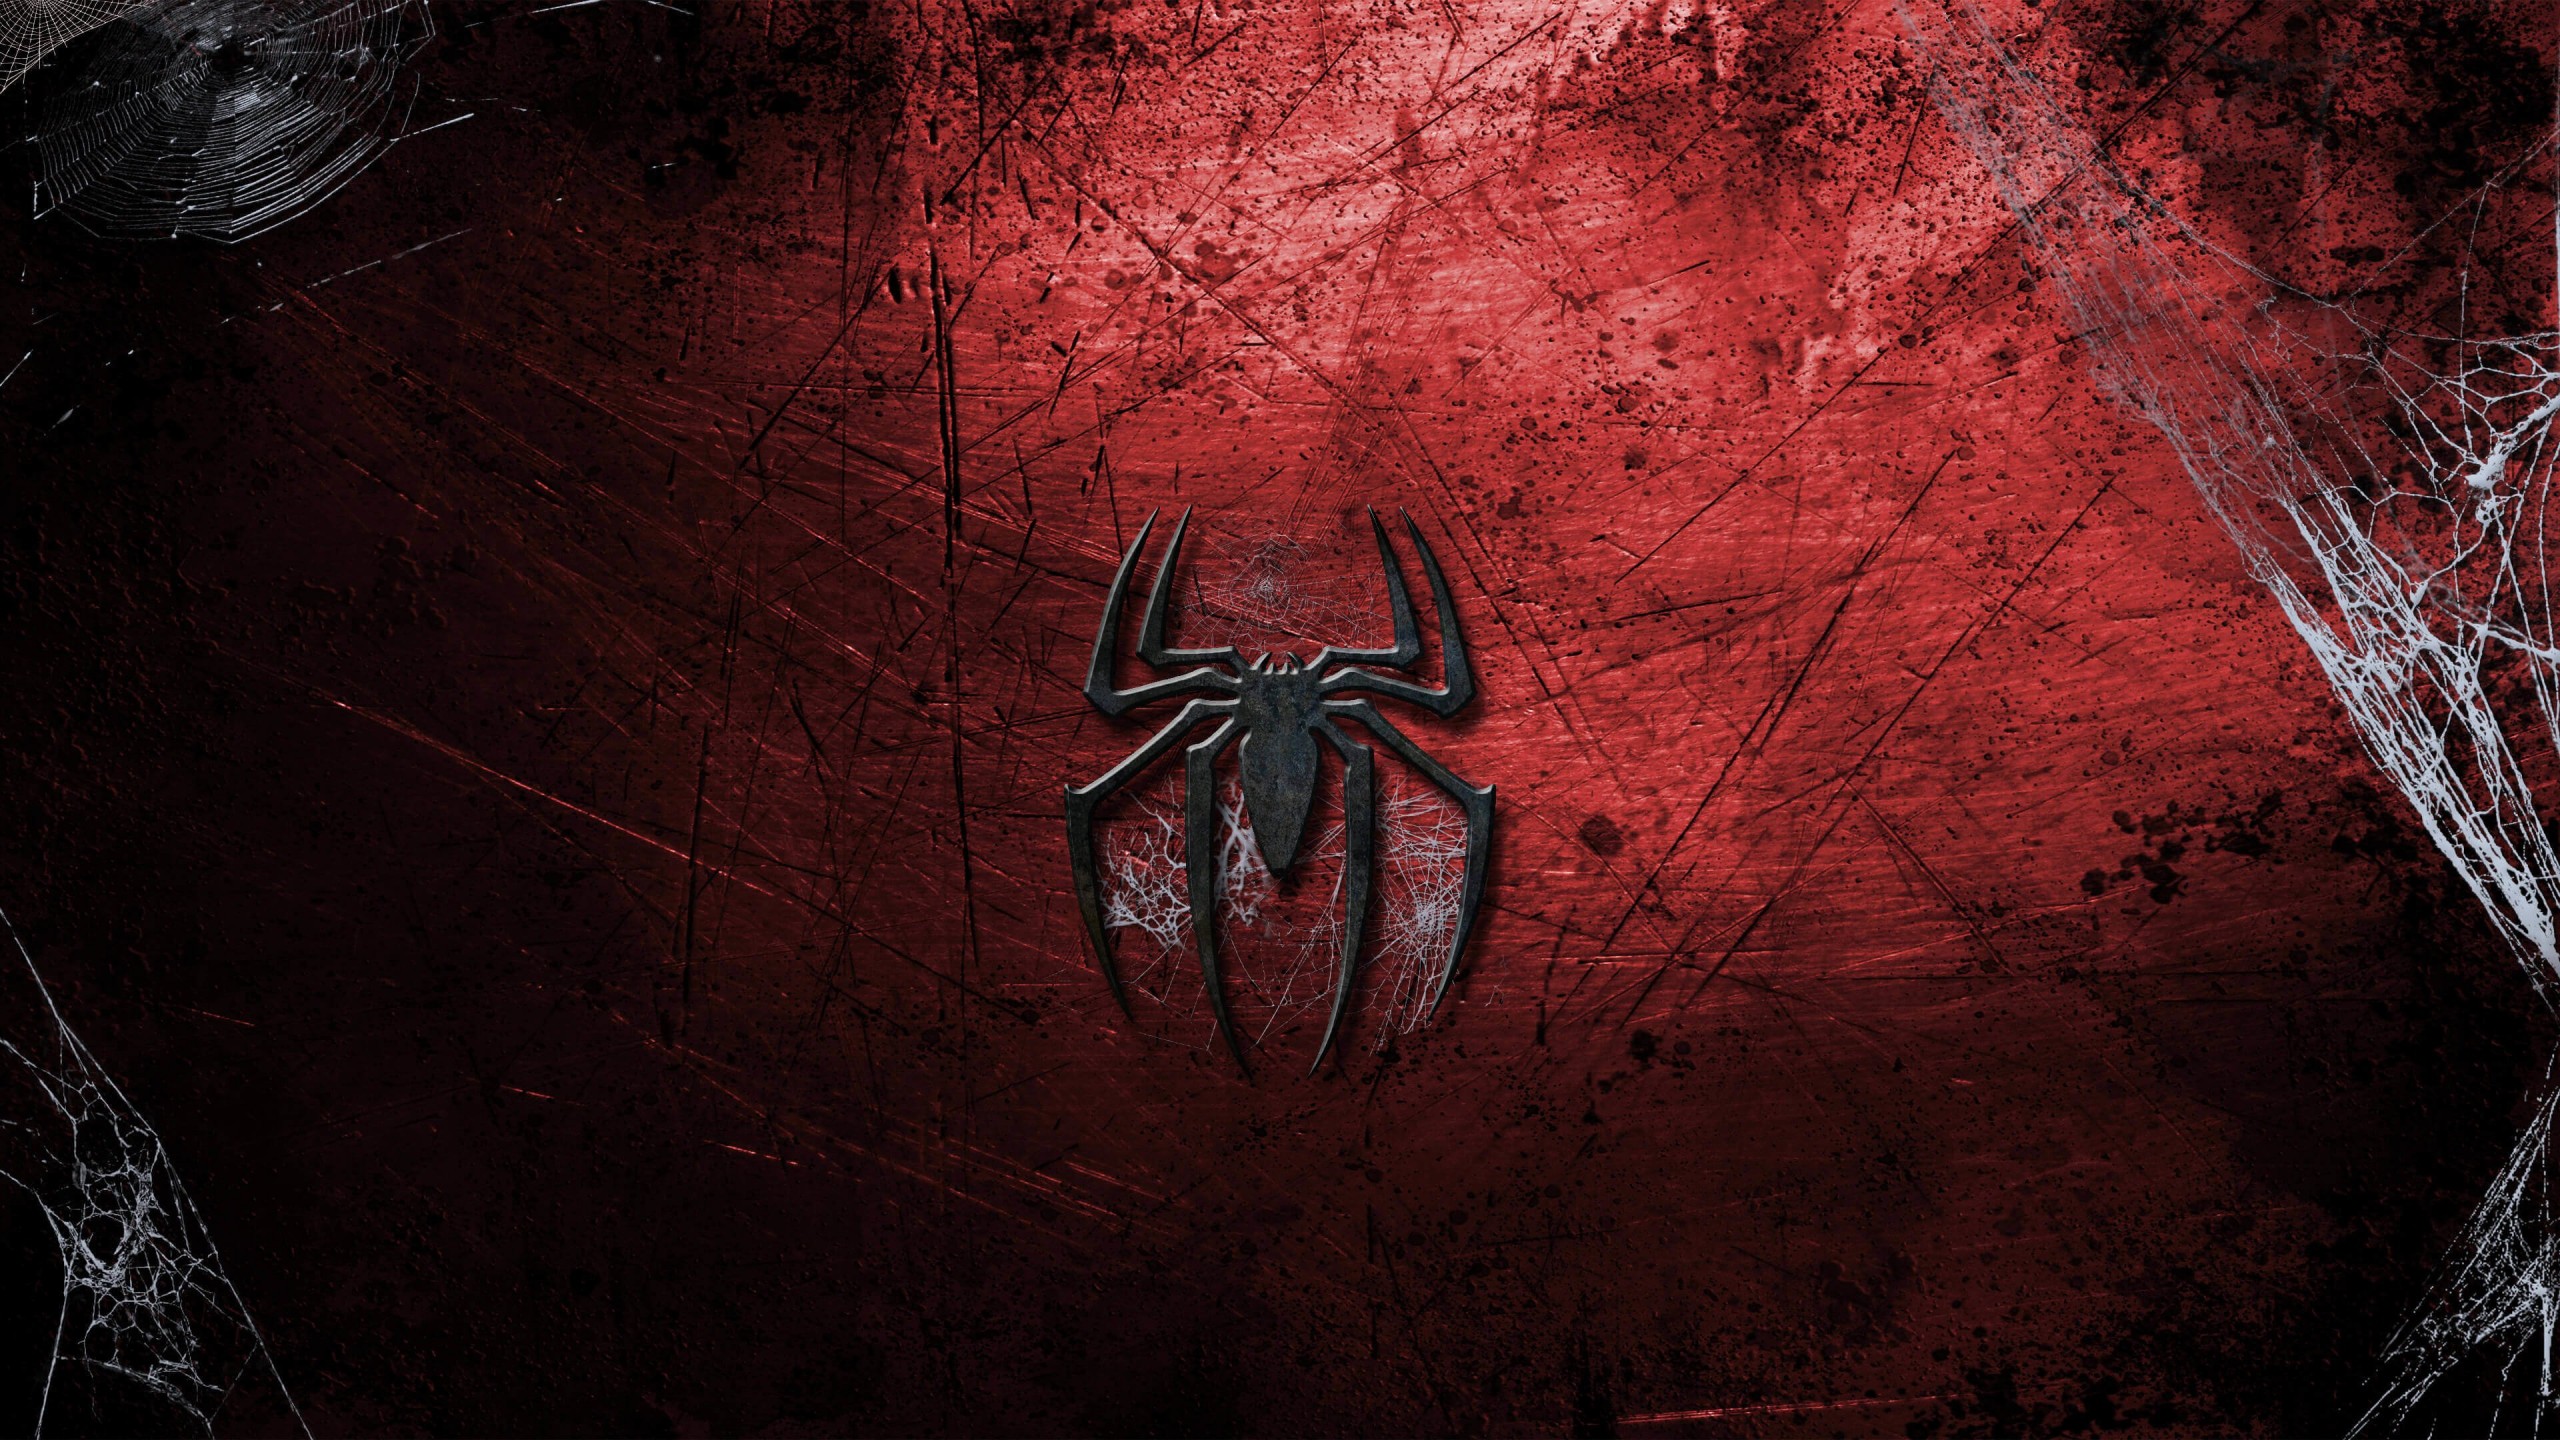 Grungy Spider-Man Logo Wallpaper for Social Media YouTube Channel Art